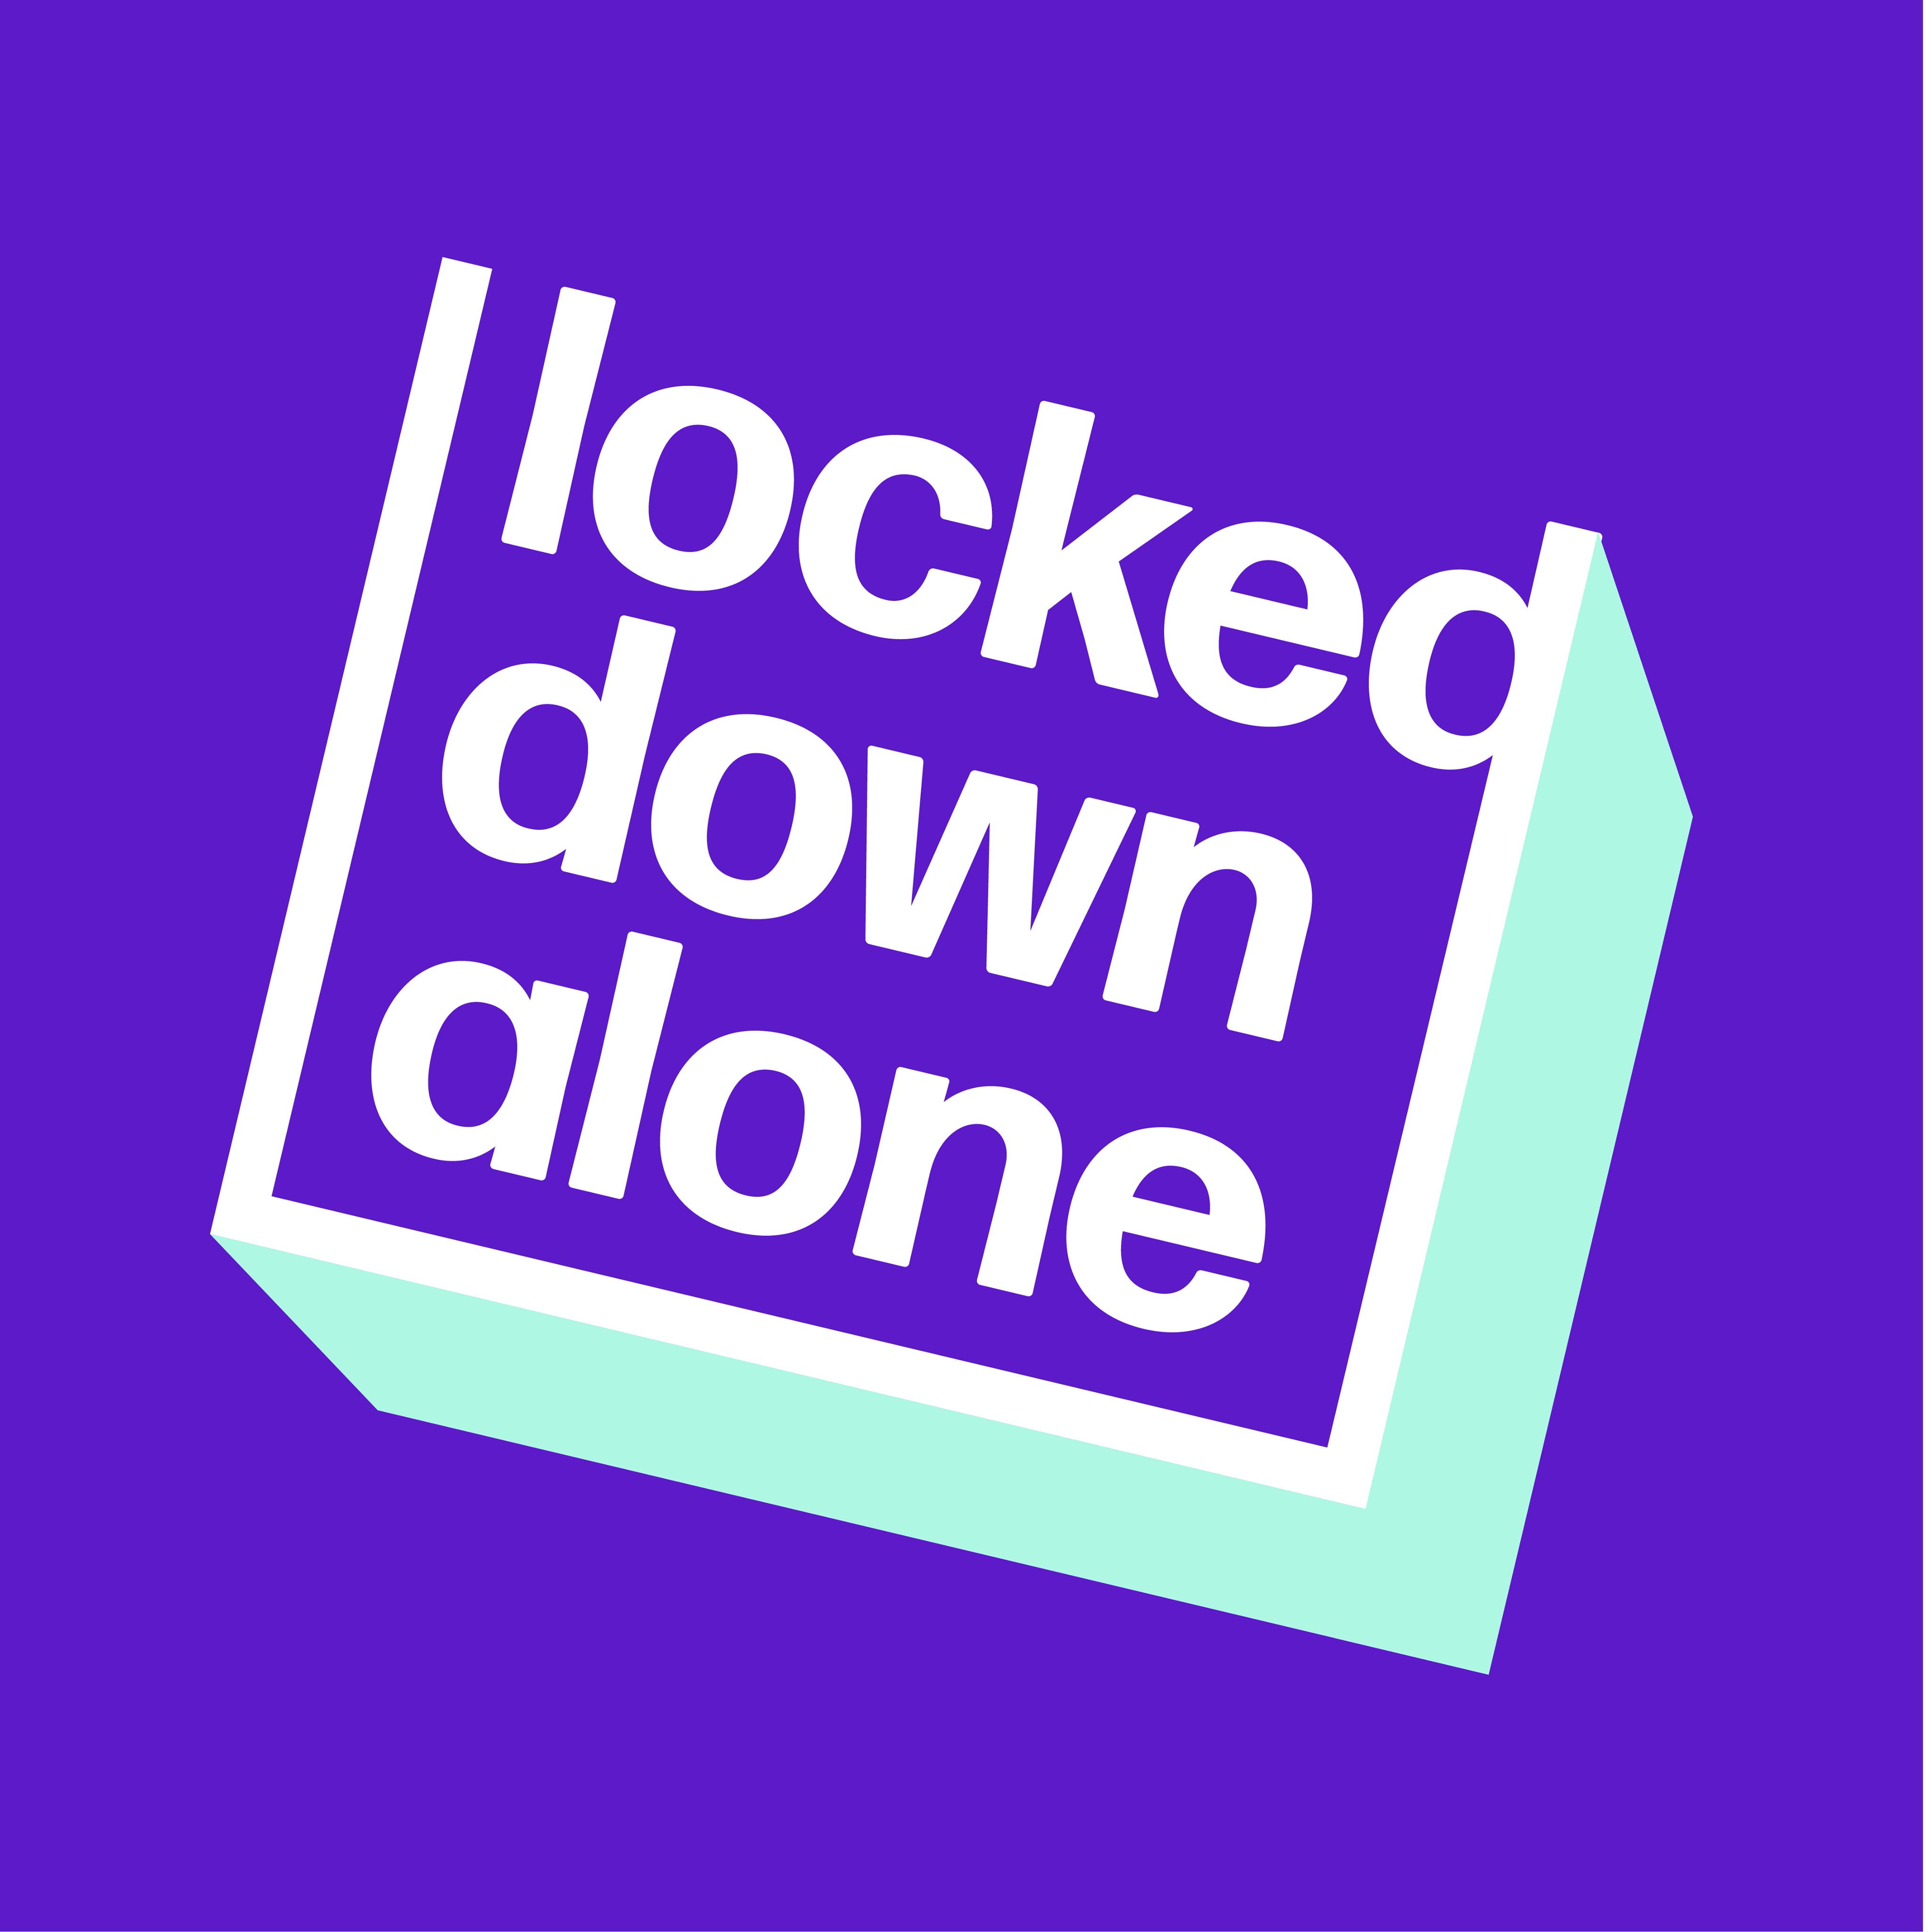 Locked Down Alone